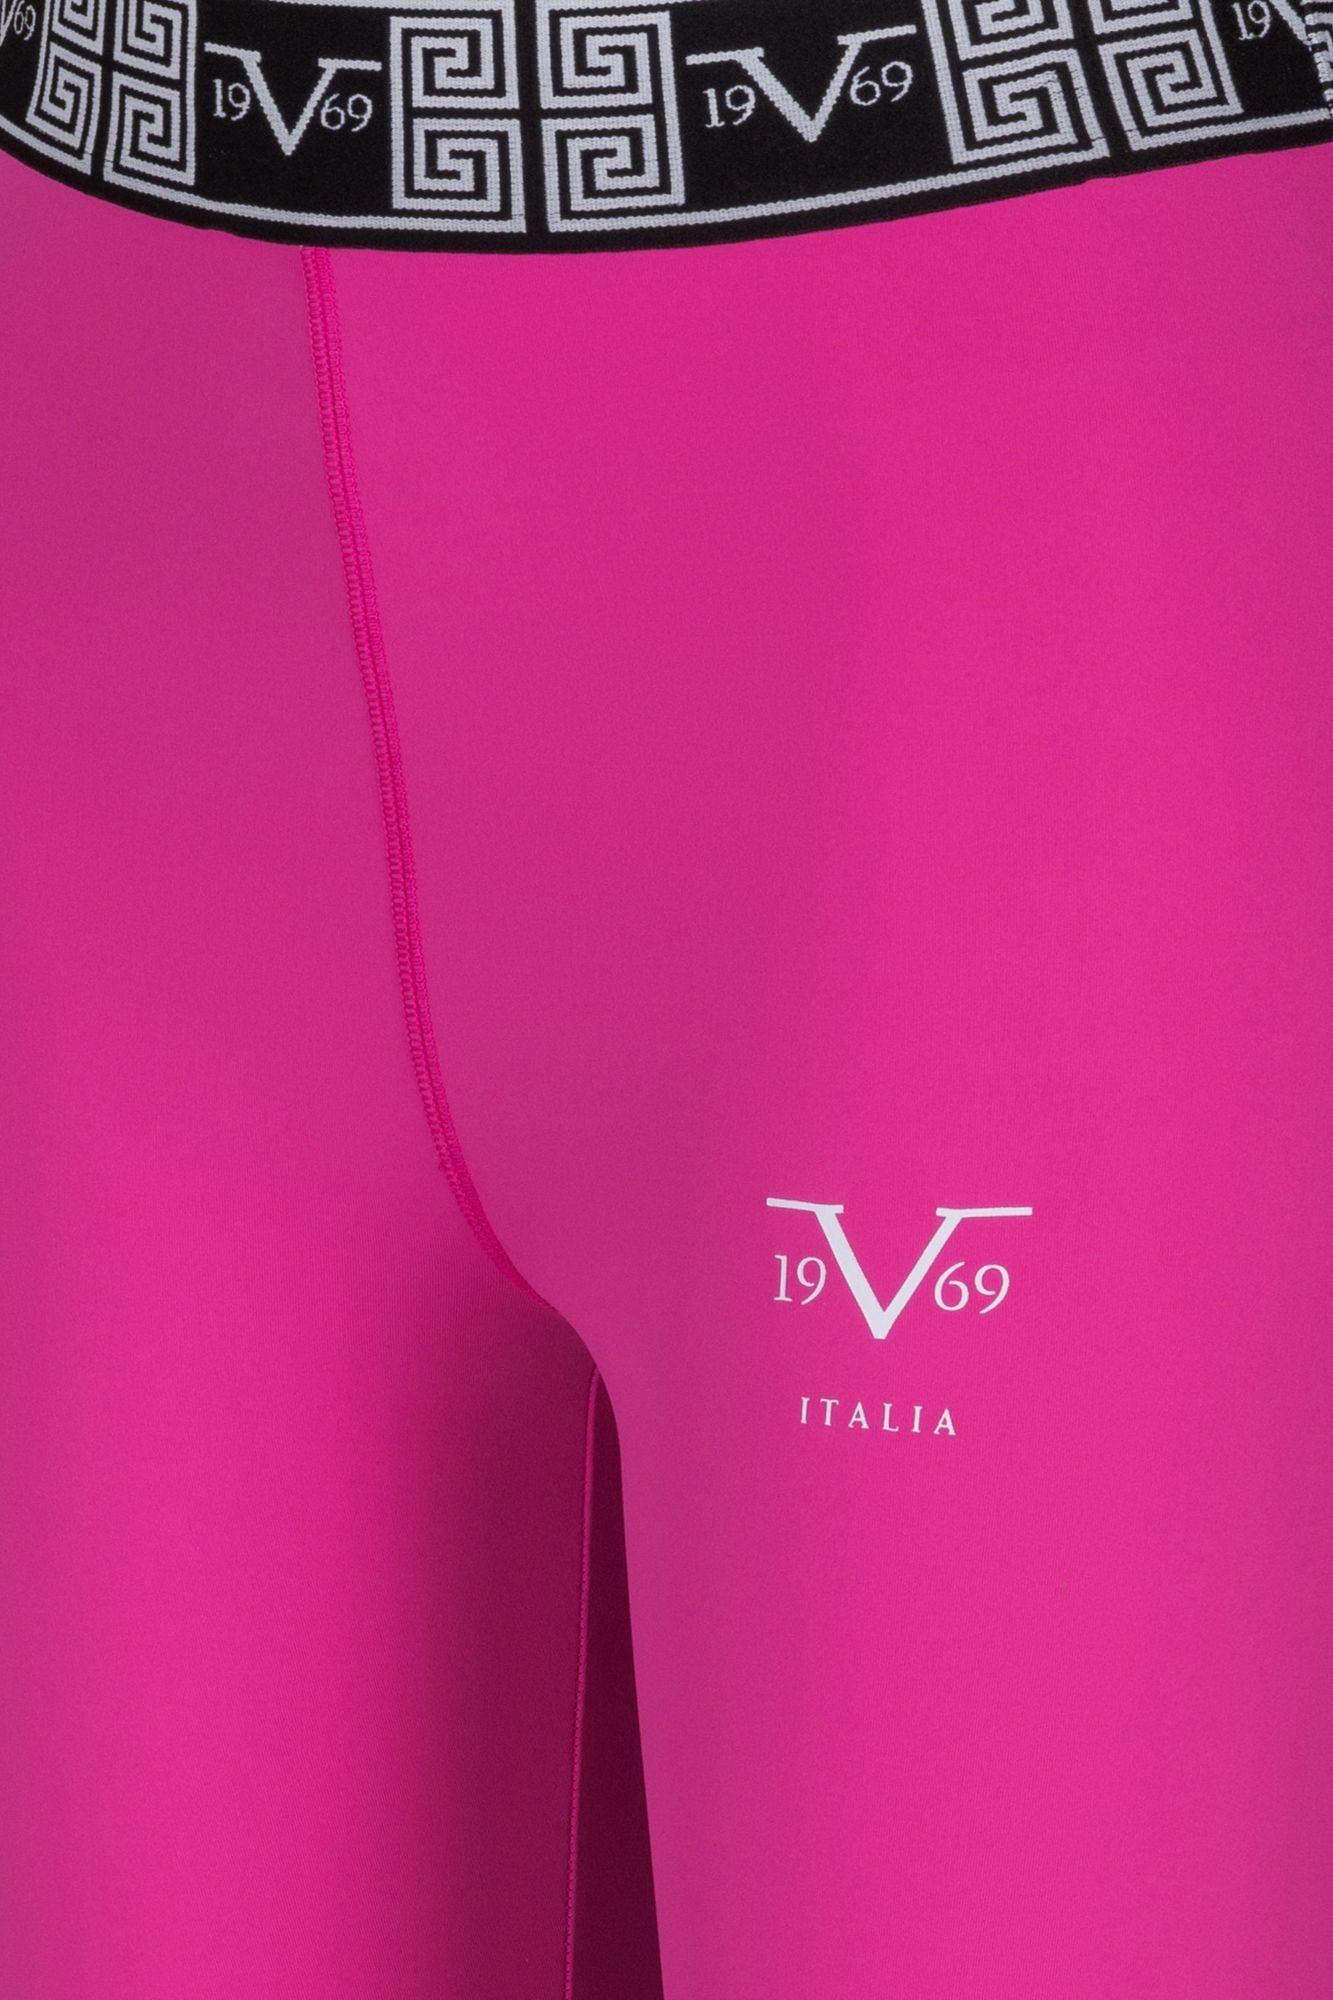 Yogaleggings Alena Italia 19V69 by Versace